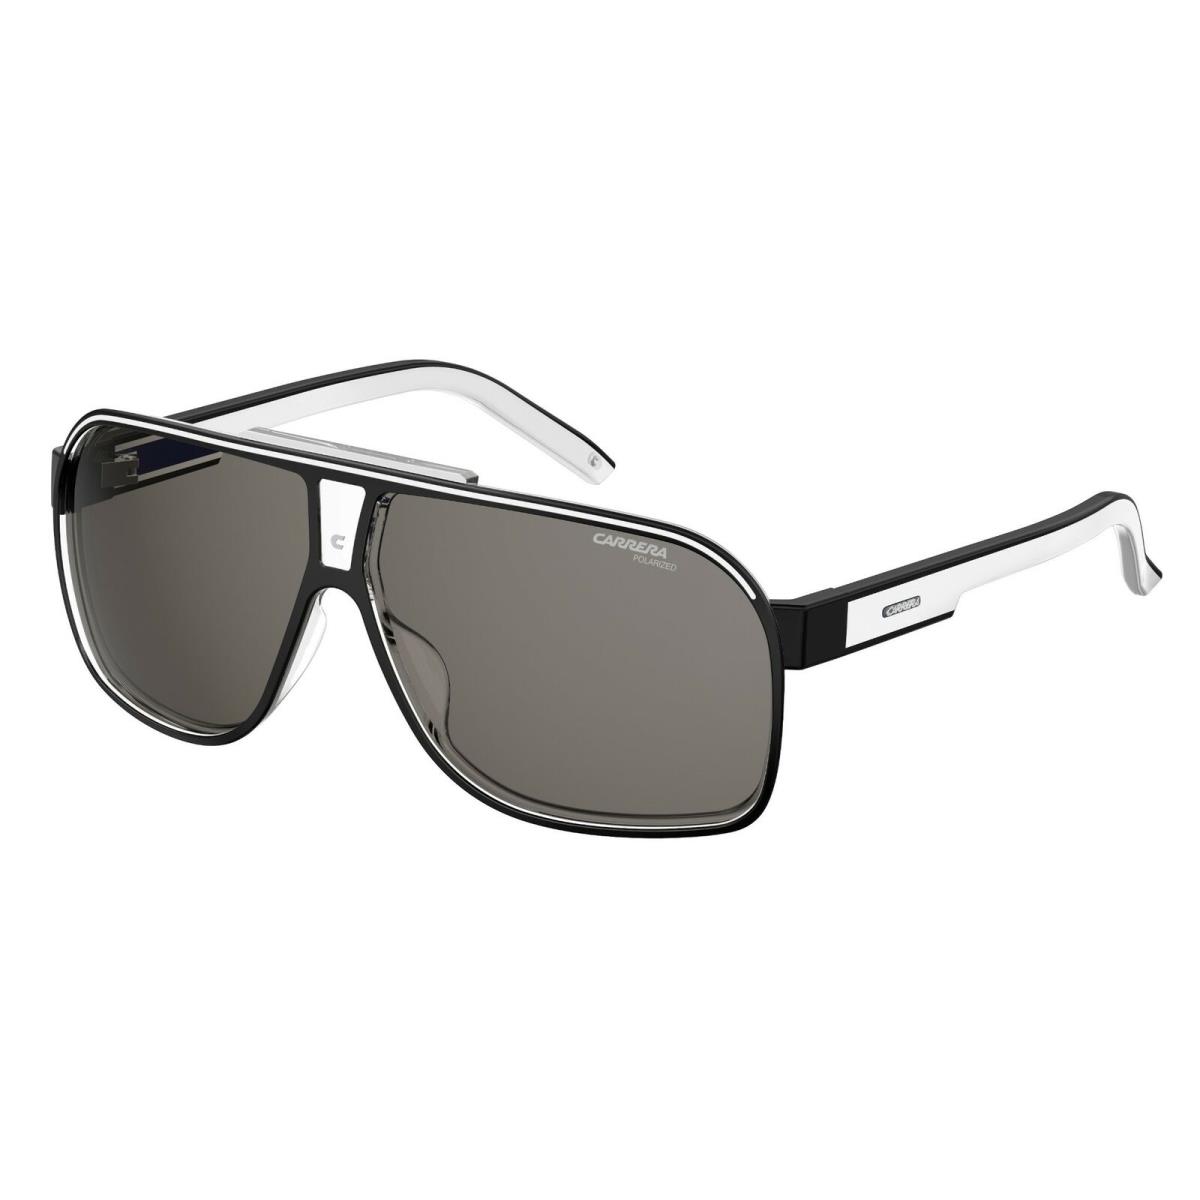 Carrera Grand Prix 2/S 07C5/M9 Black Crystal/gray Polarized Sunglasses